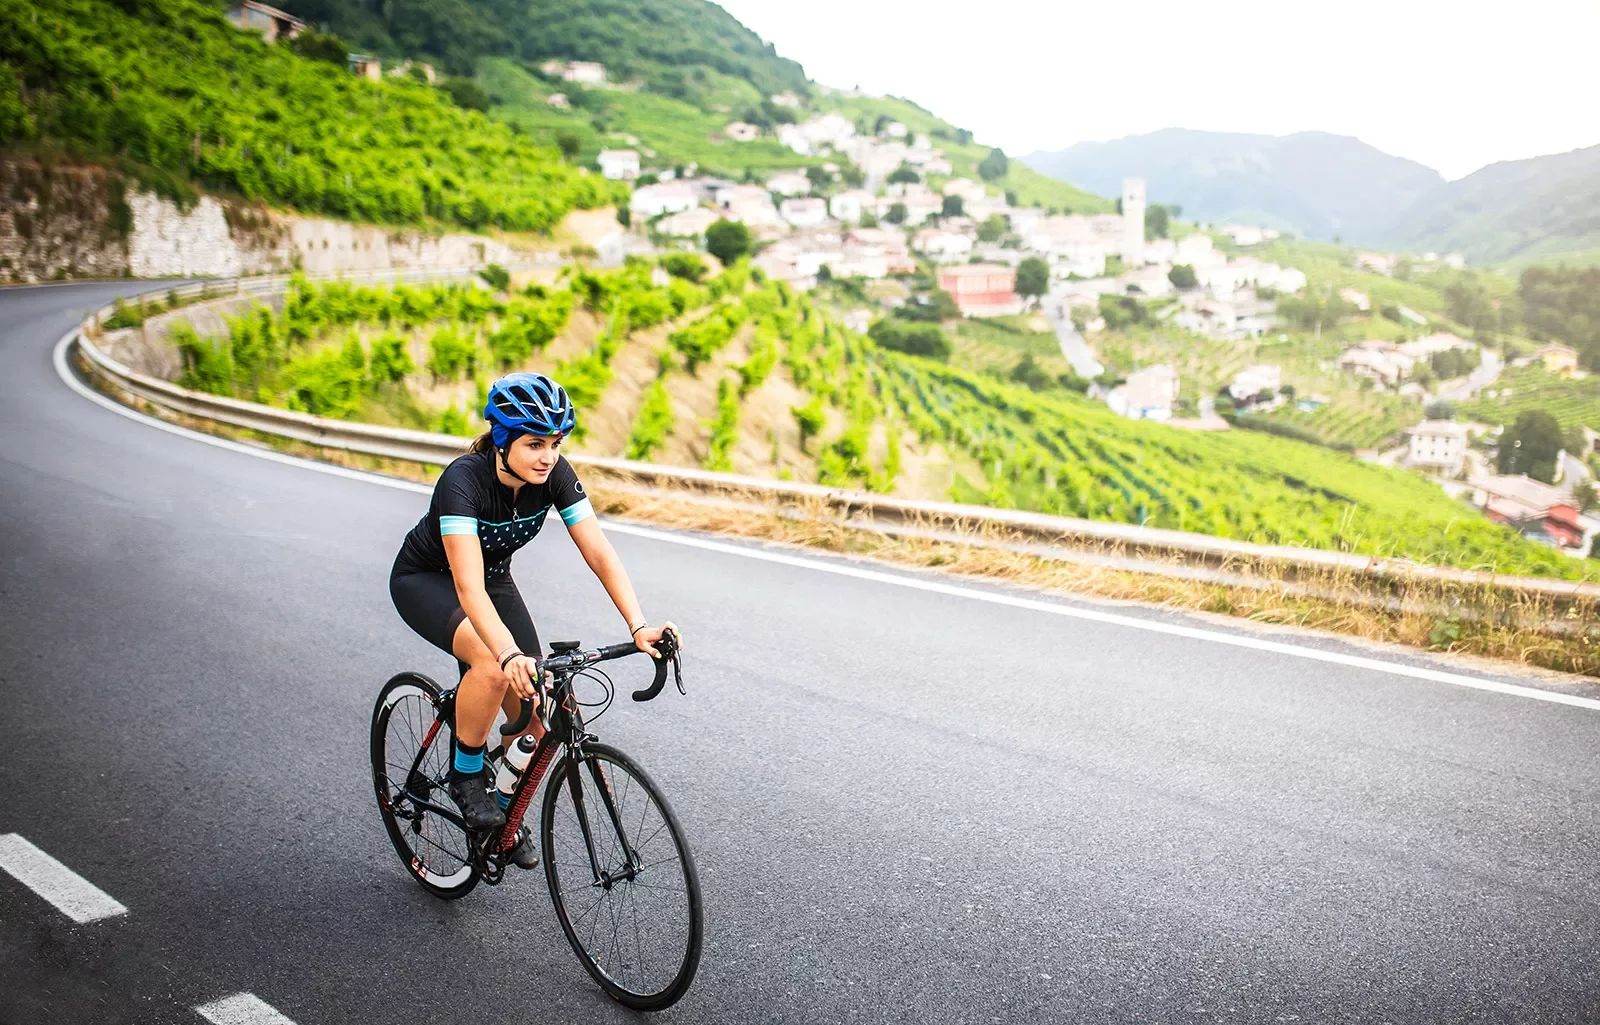 Guest cycling past vineyard, hillside town.